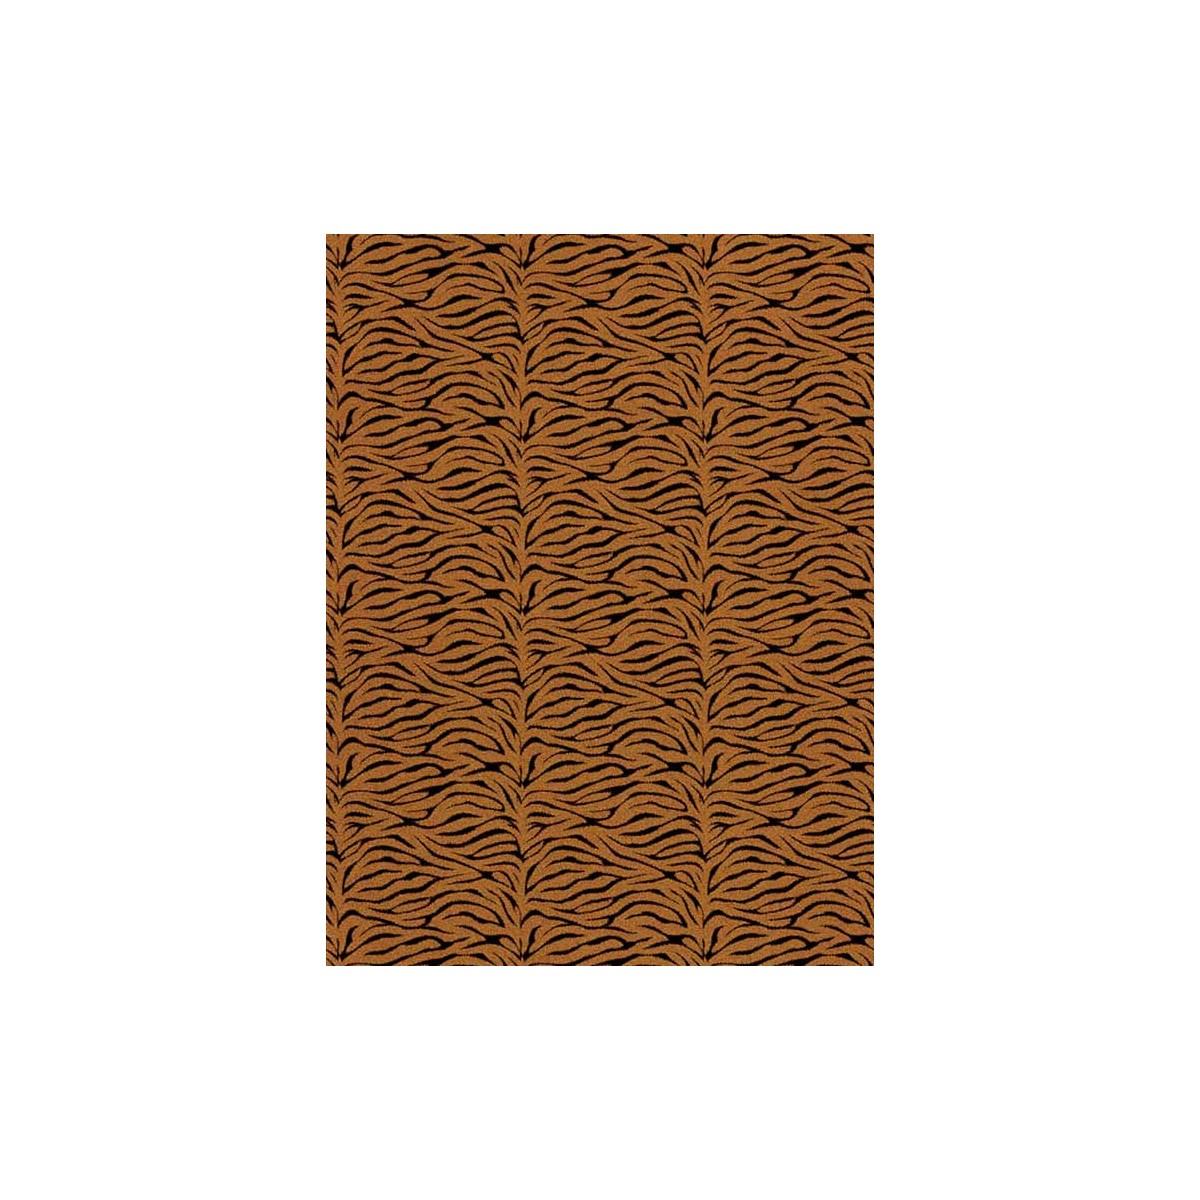 Cork fabric Technical Patterns - Tiger